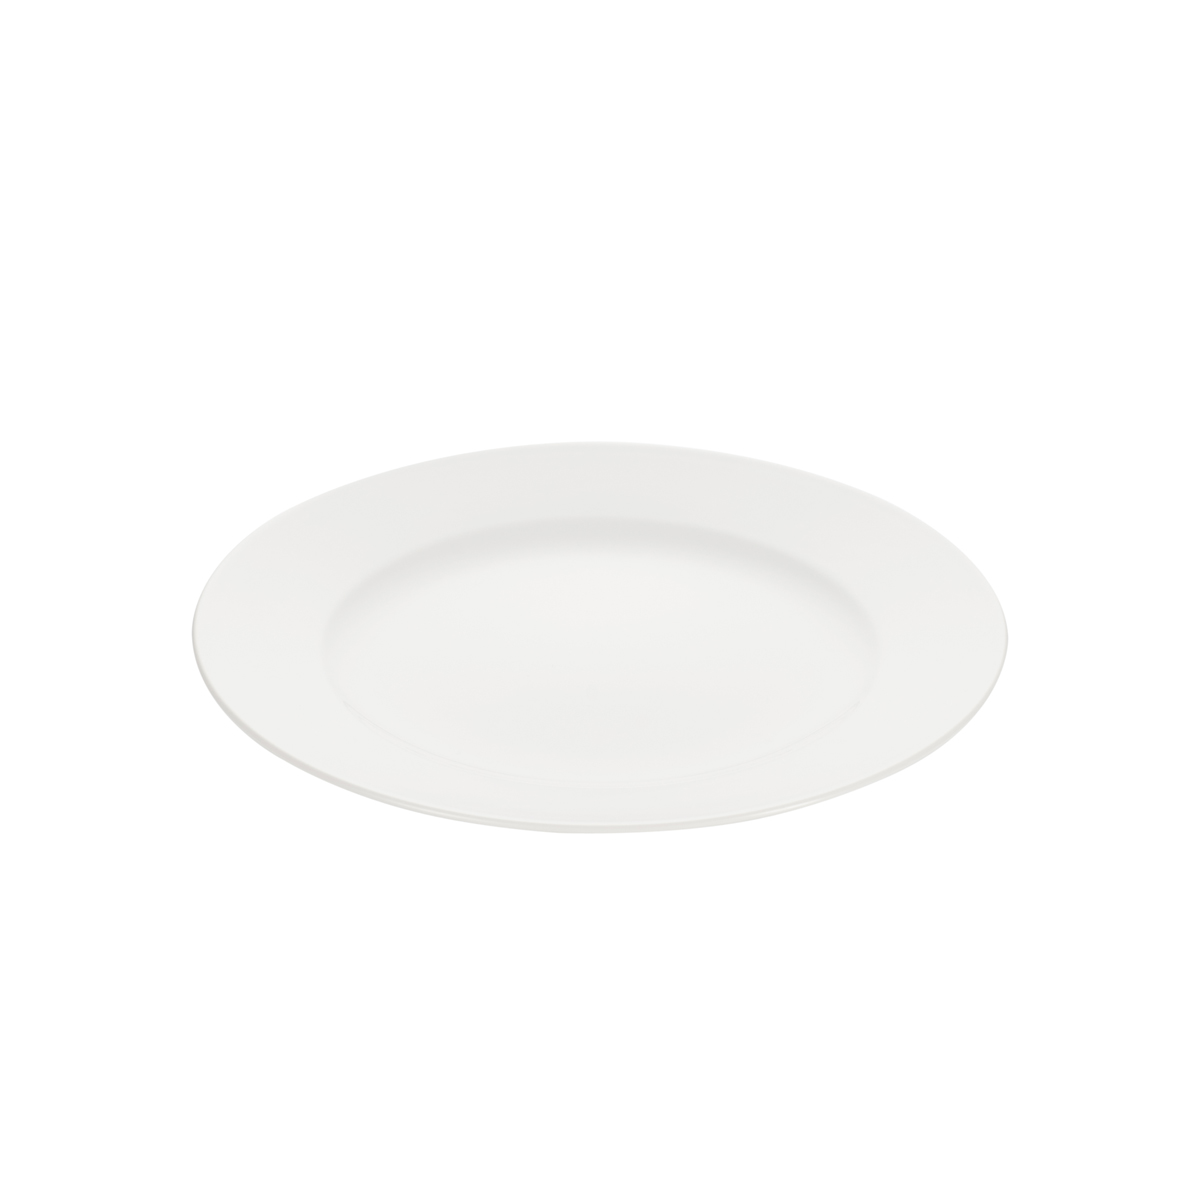 Плоская тарелка Gipfel Classique 50907 30 см плоская тарелка gipfel classique 50907 30 см